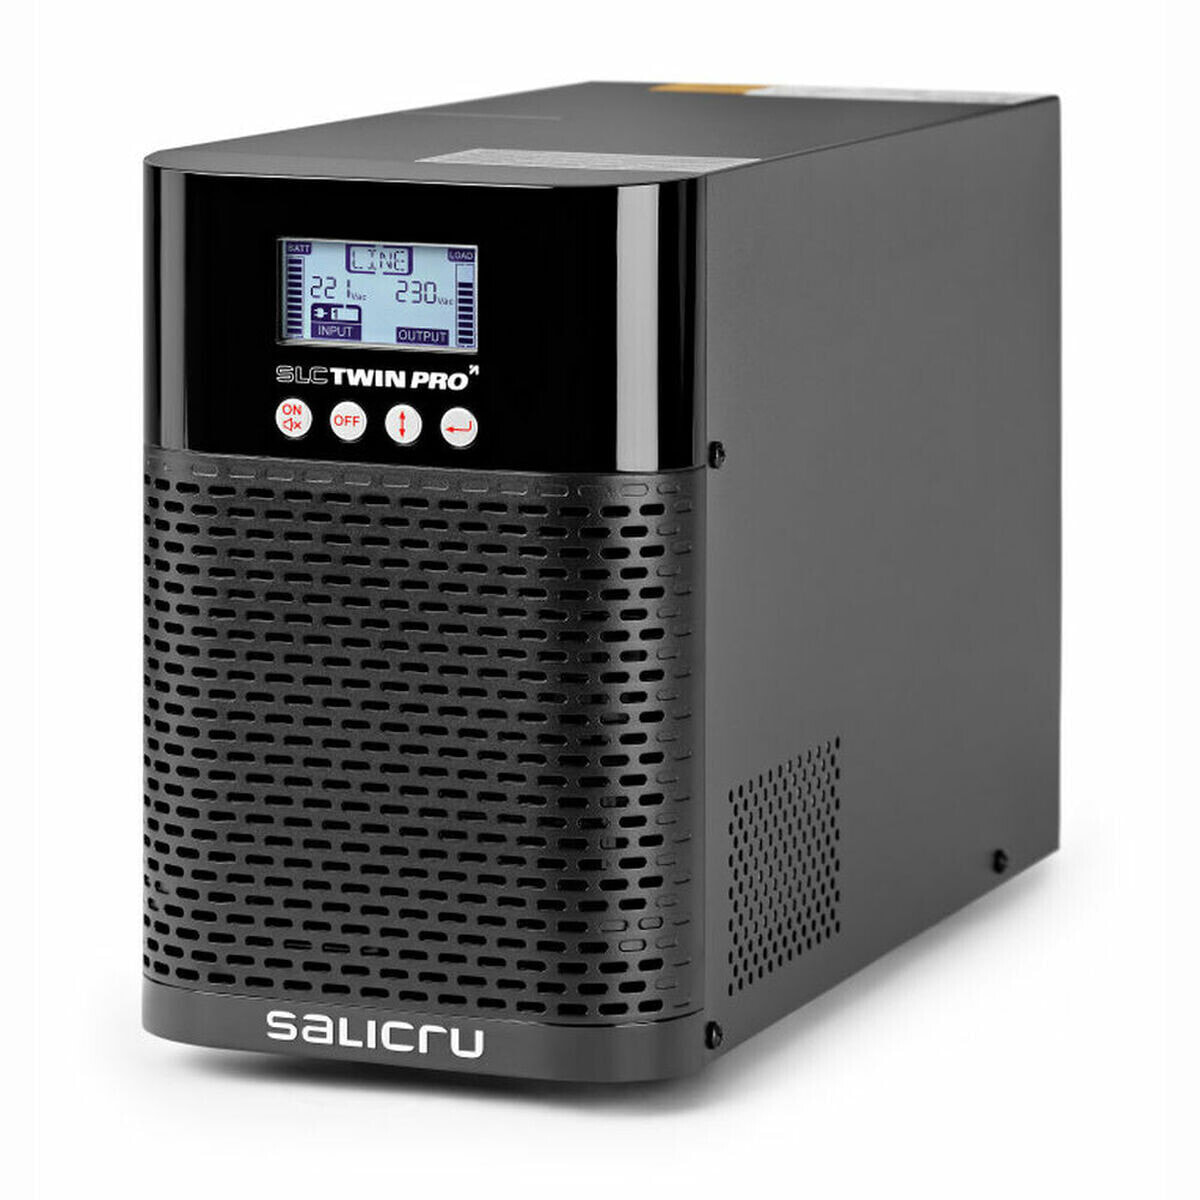 Online Uninterruptible Power Supply System UPS Salicru SLC-700-TWIN PRO2 700W